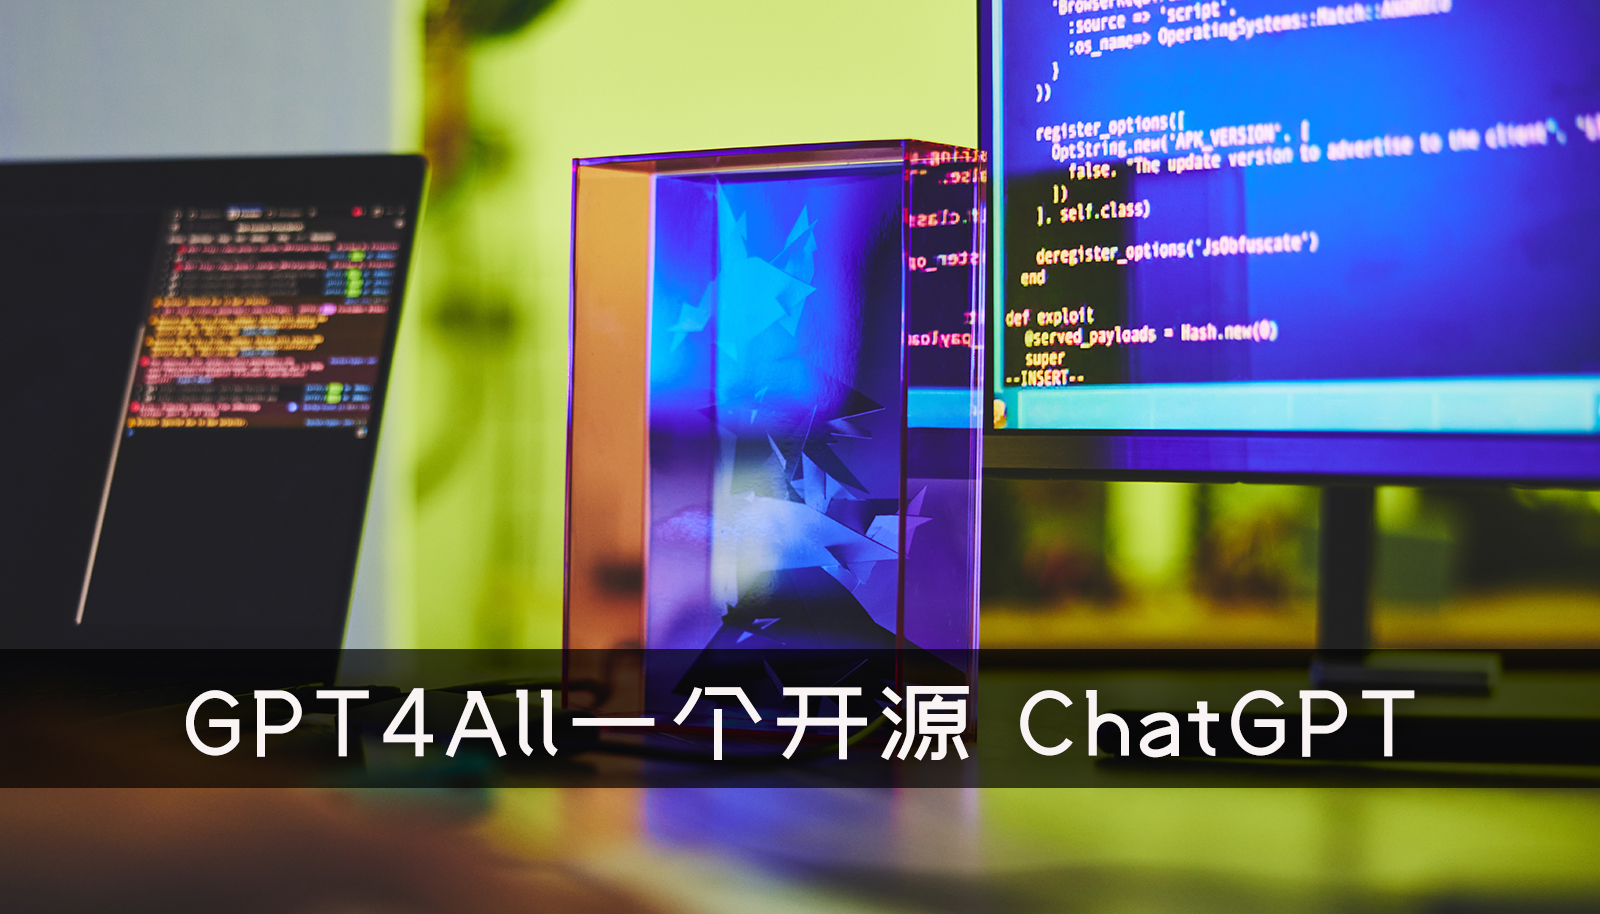 GPT4All一个开源 ChatGPT